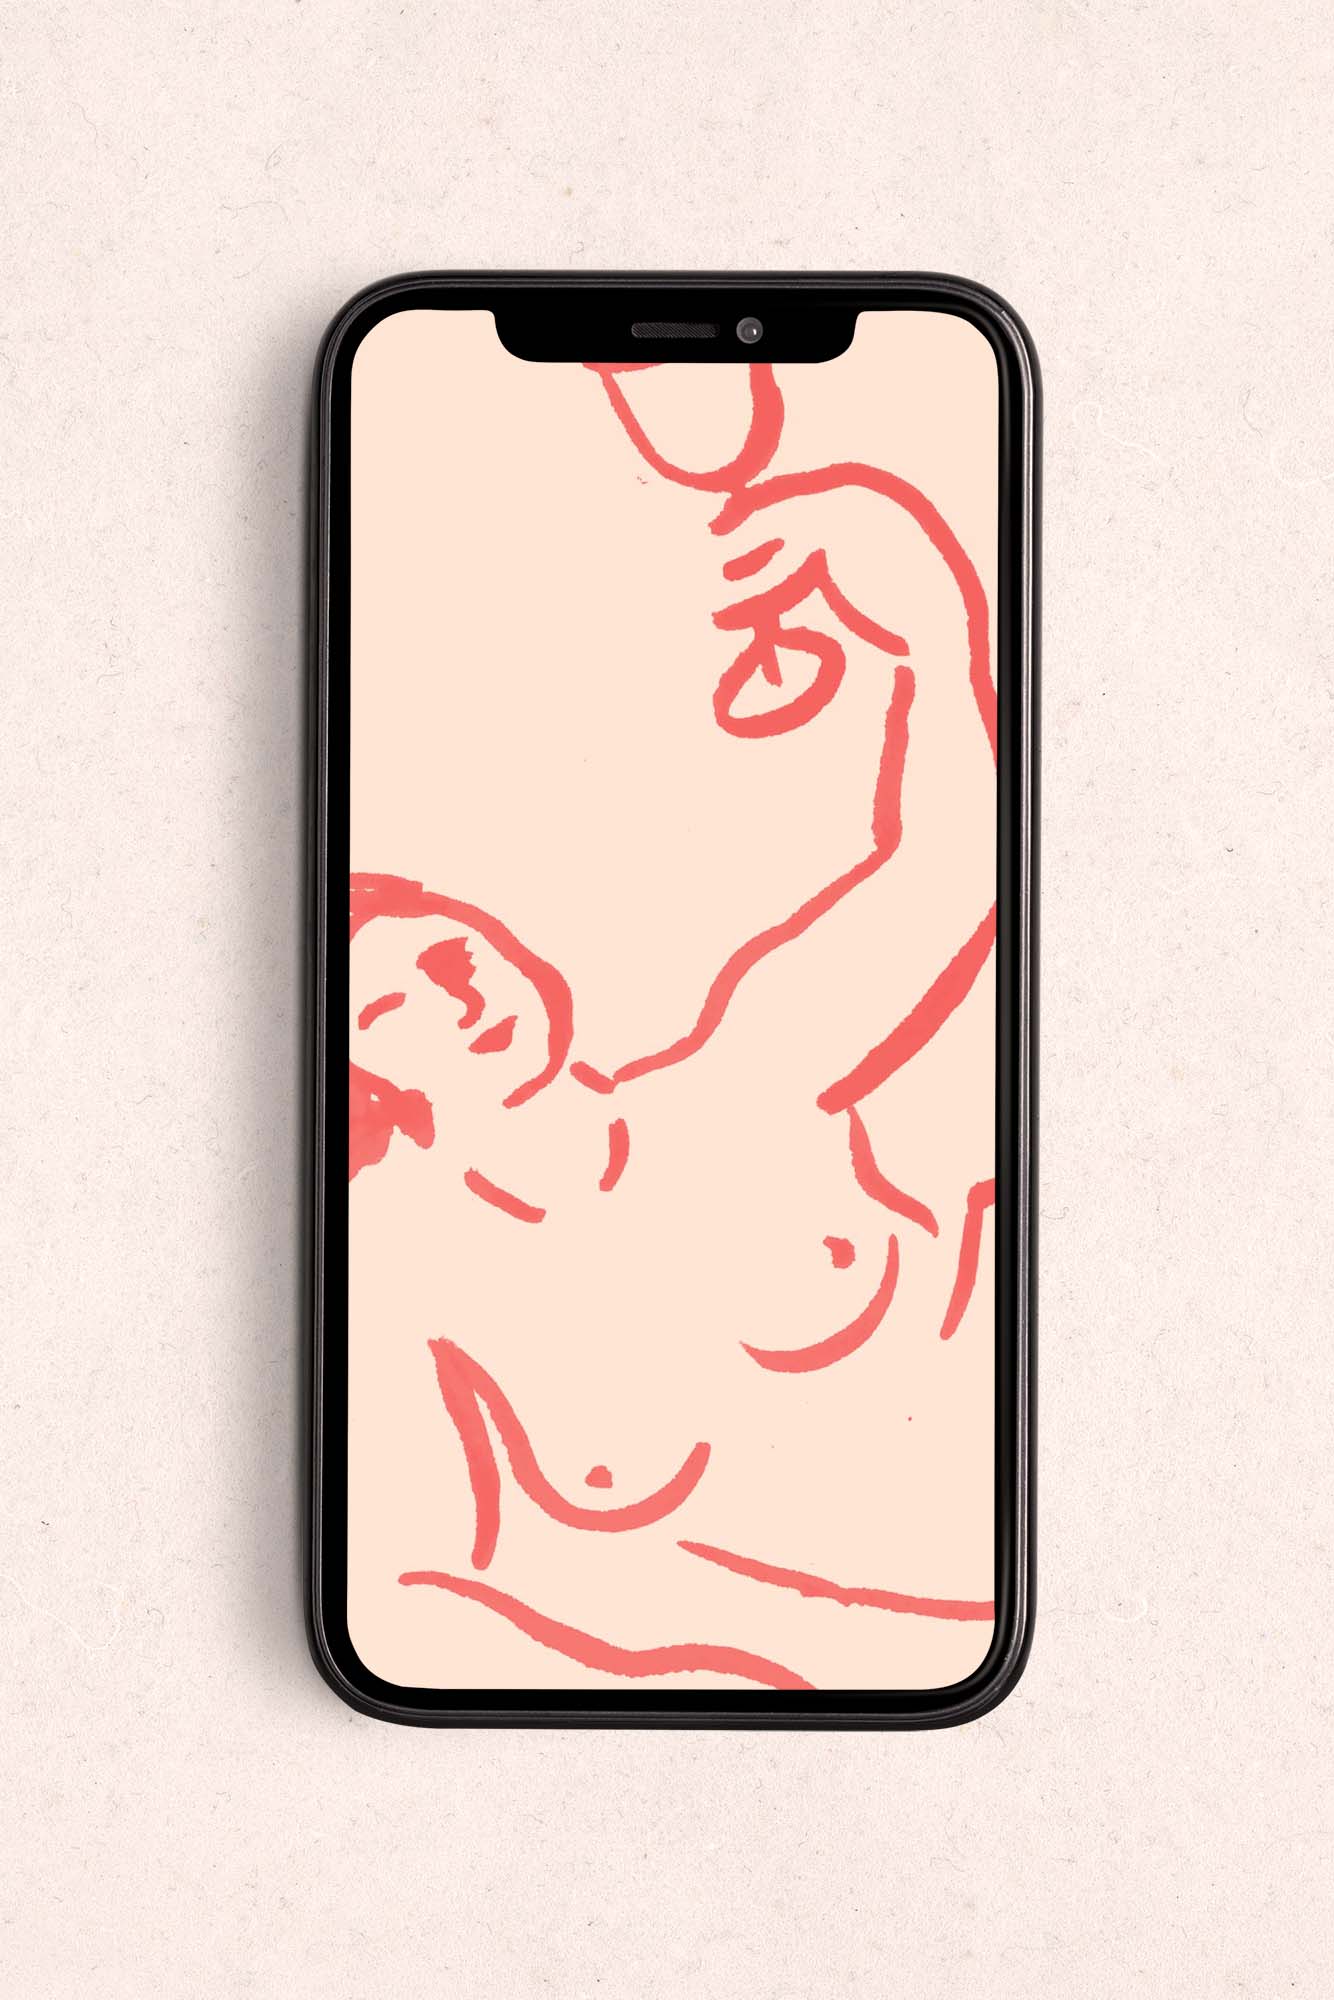 Cheers Nude Phone Wallpaper Digital Download